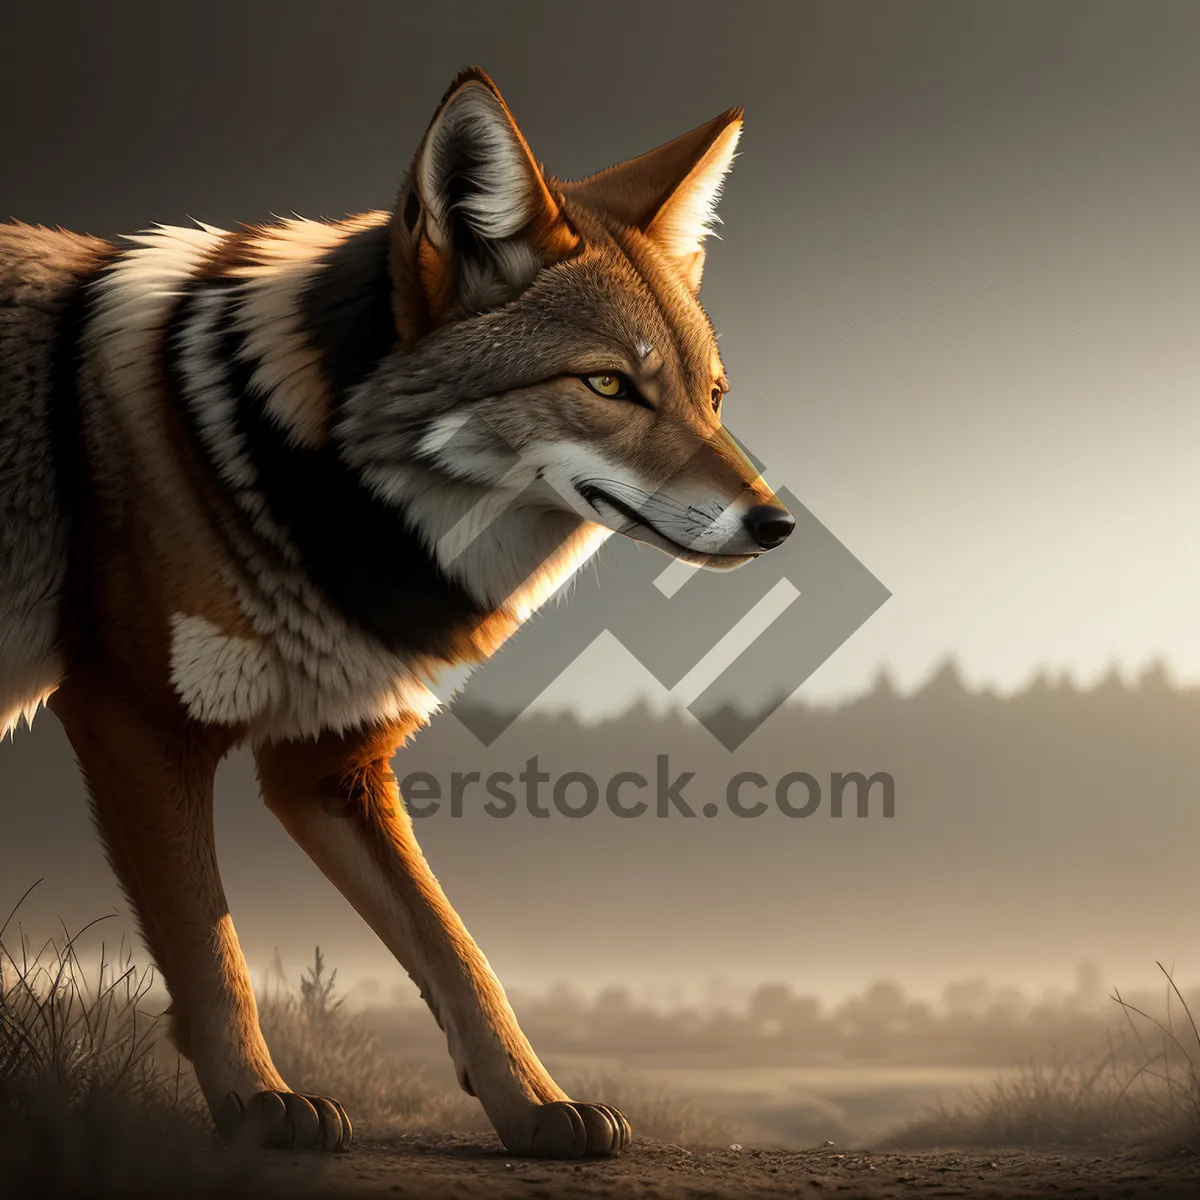 Picture of Fierce Canine Gaze: Majestic Coyote in Focus